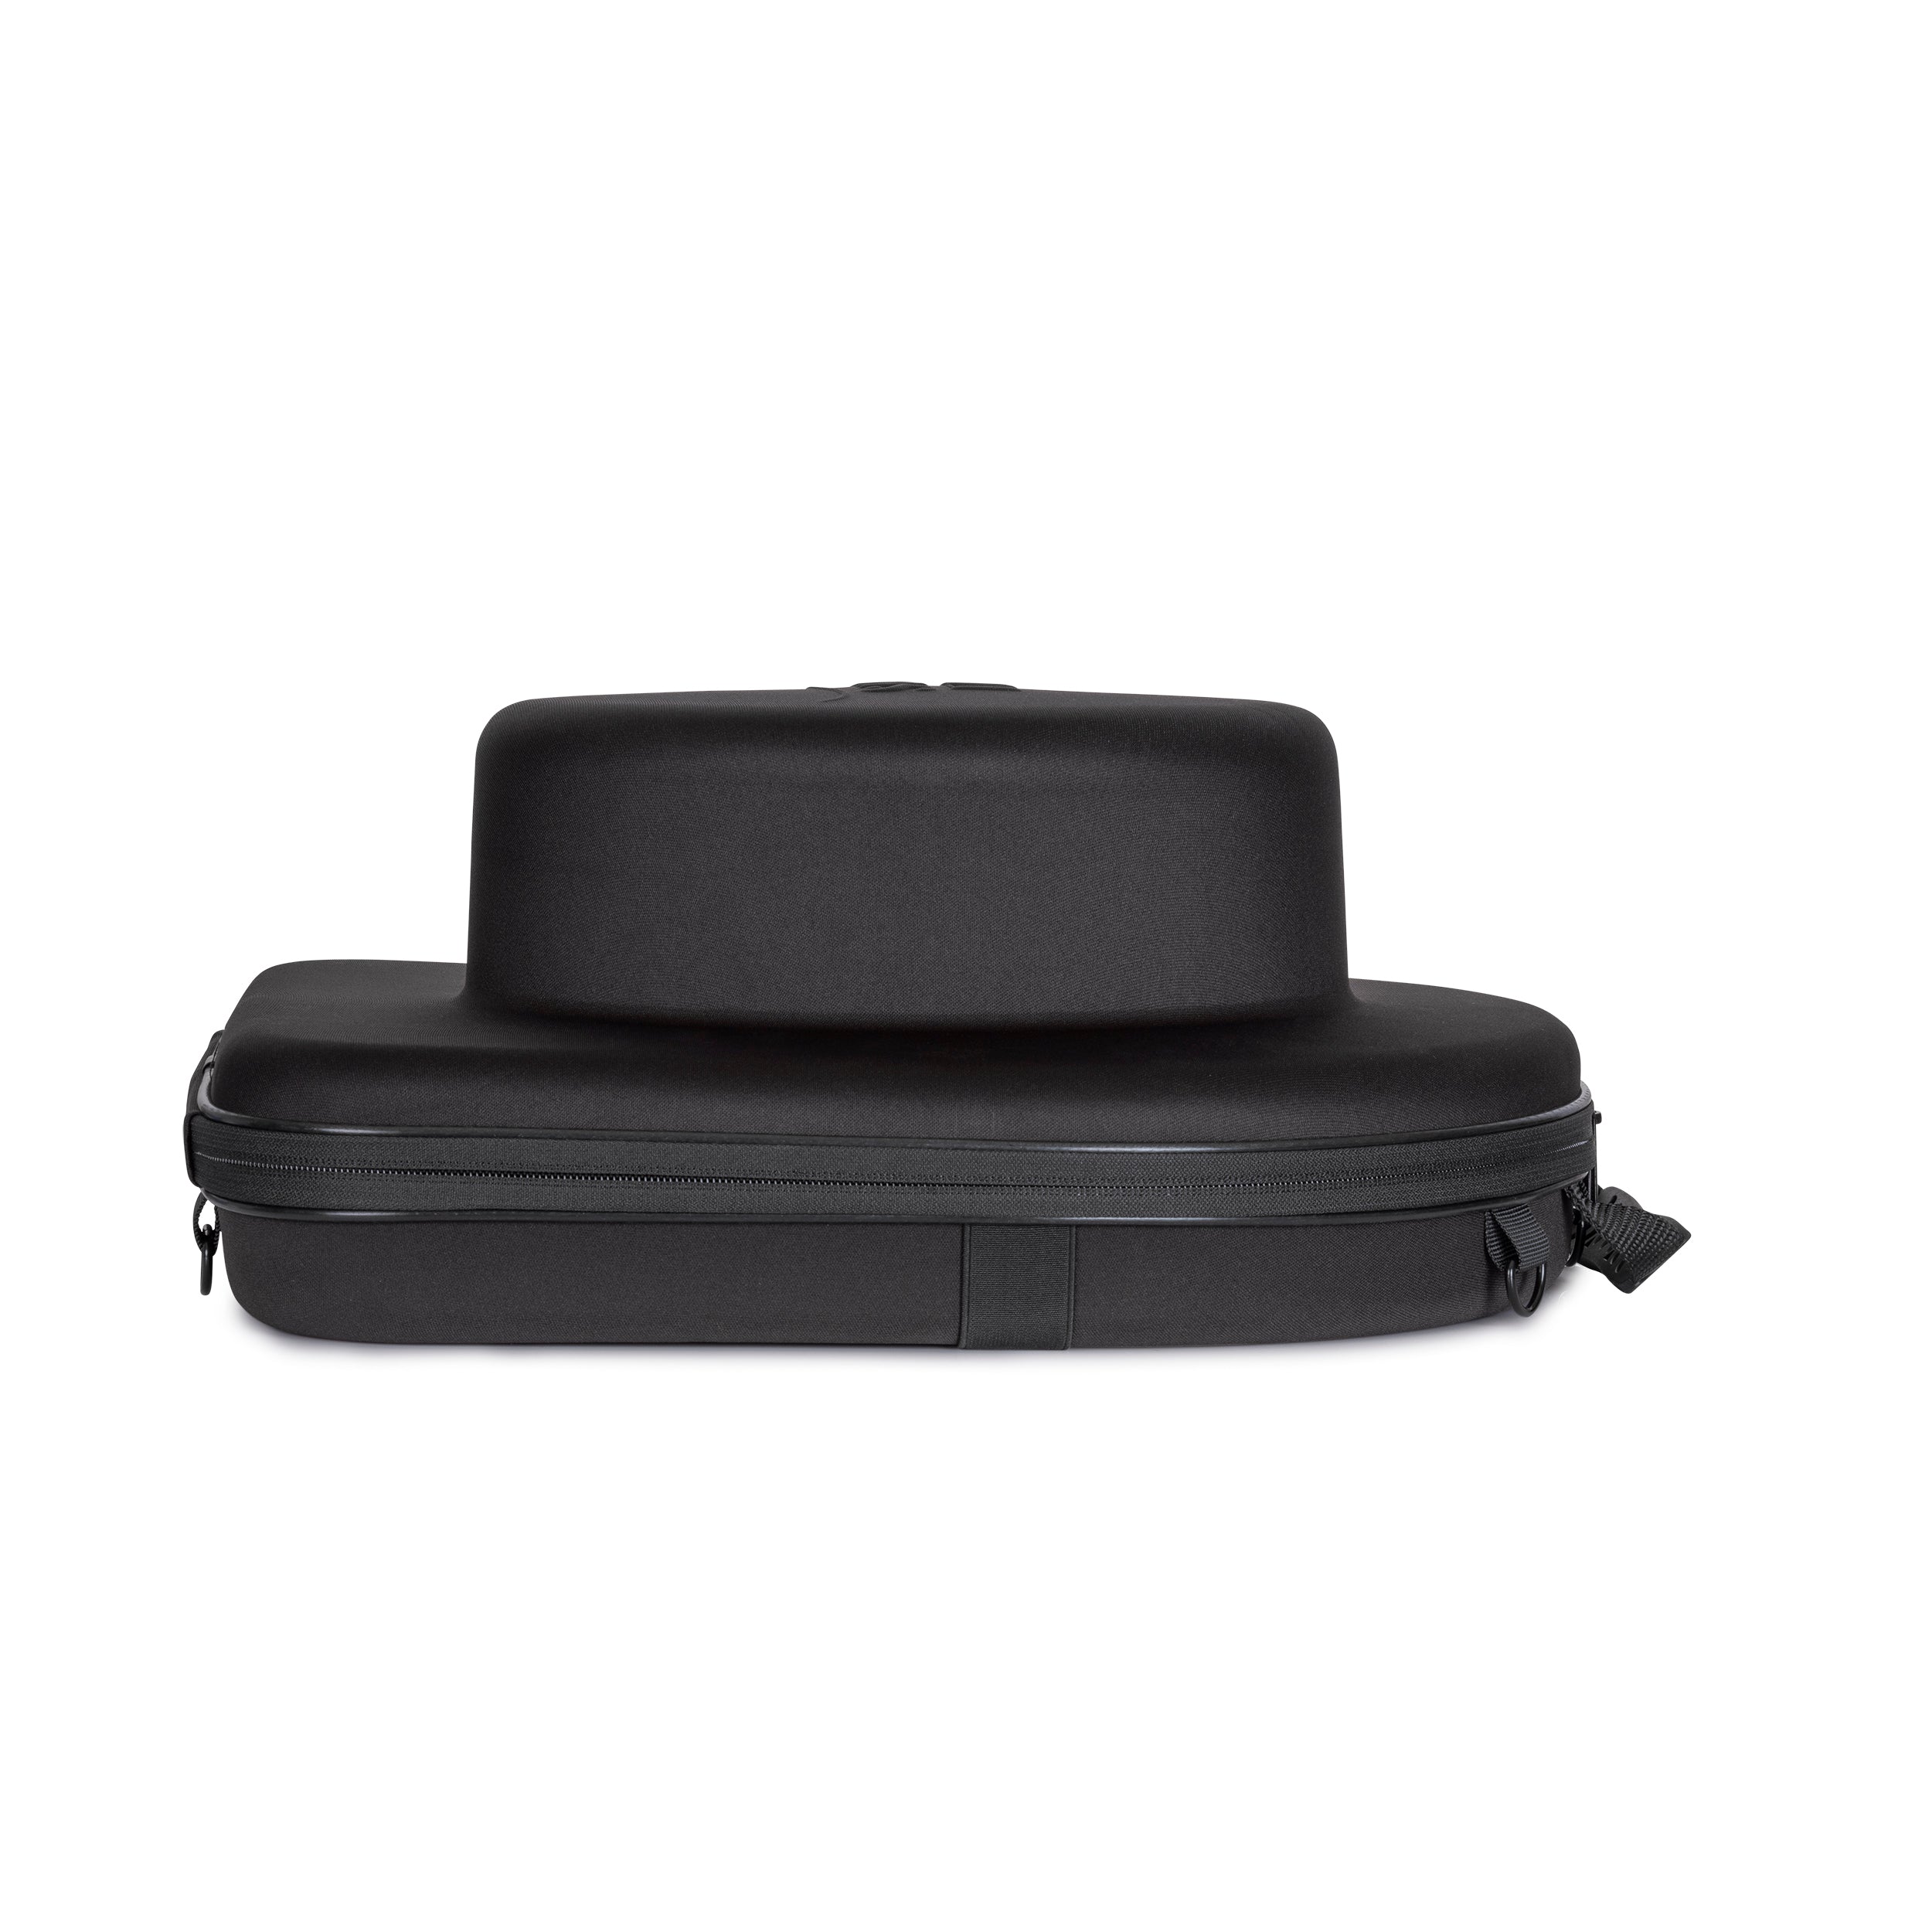  Atzi Hats Hat Case for Travel Hat Box Hat Storage